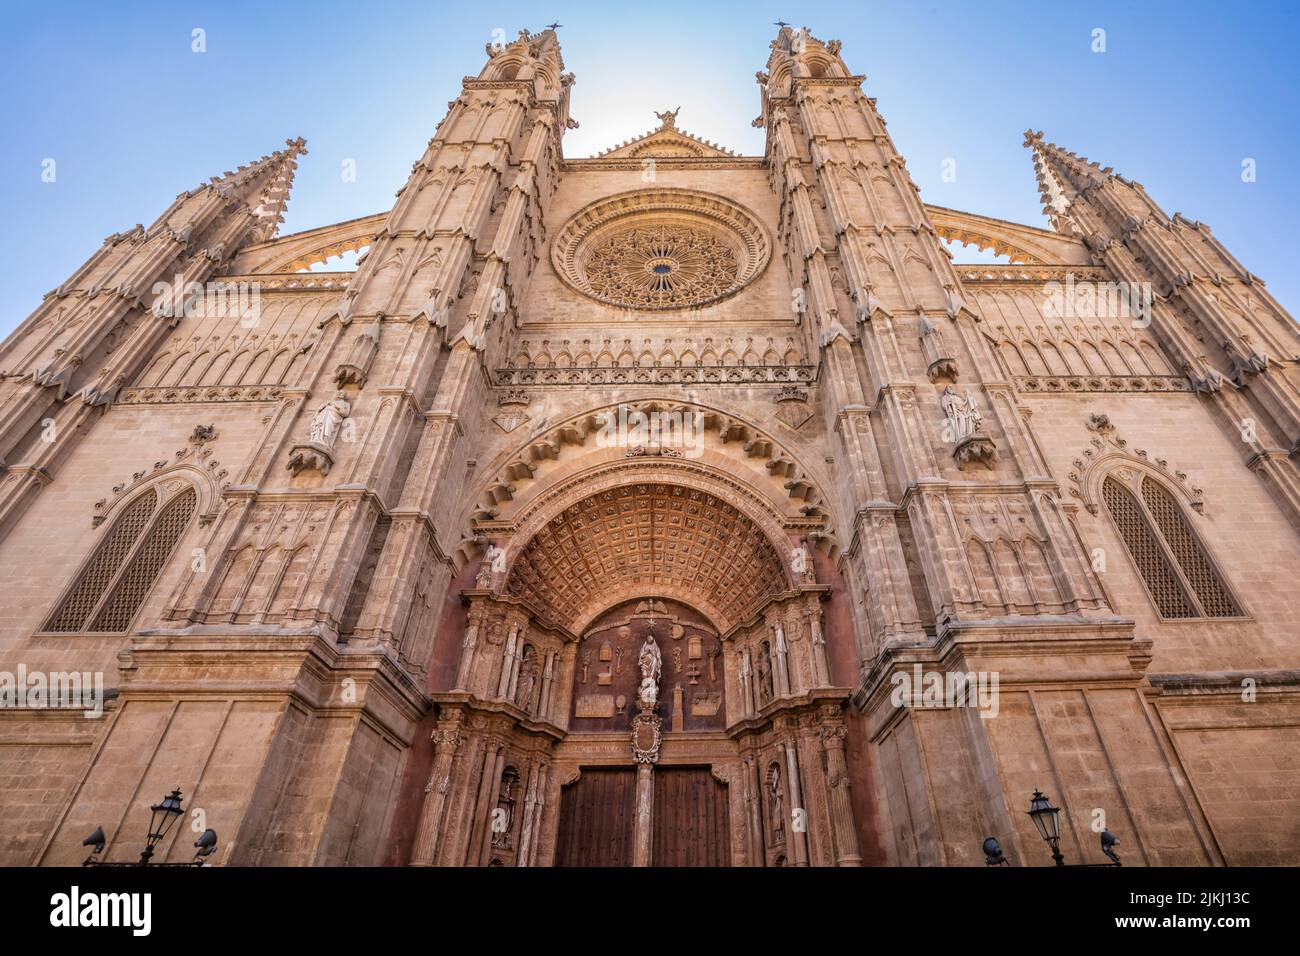 Spain, Balearic islands, Mallorca, Palma. The Cathedral of Santa Maria of Palma (Cathedral of St. Mary of Palma) also konwn as La Seu Stock Photo